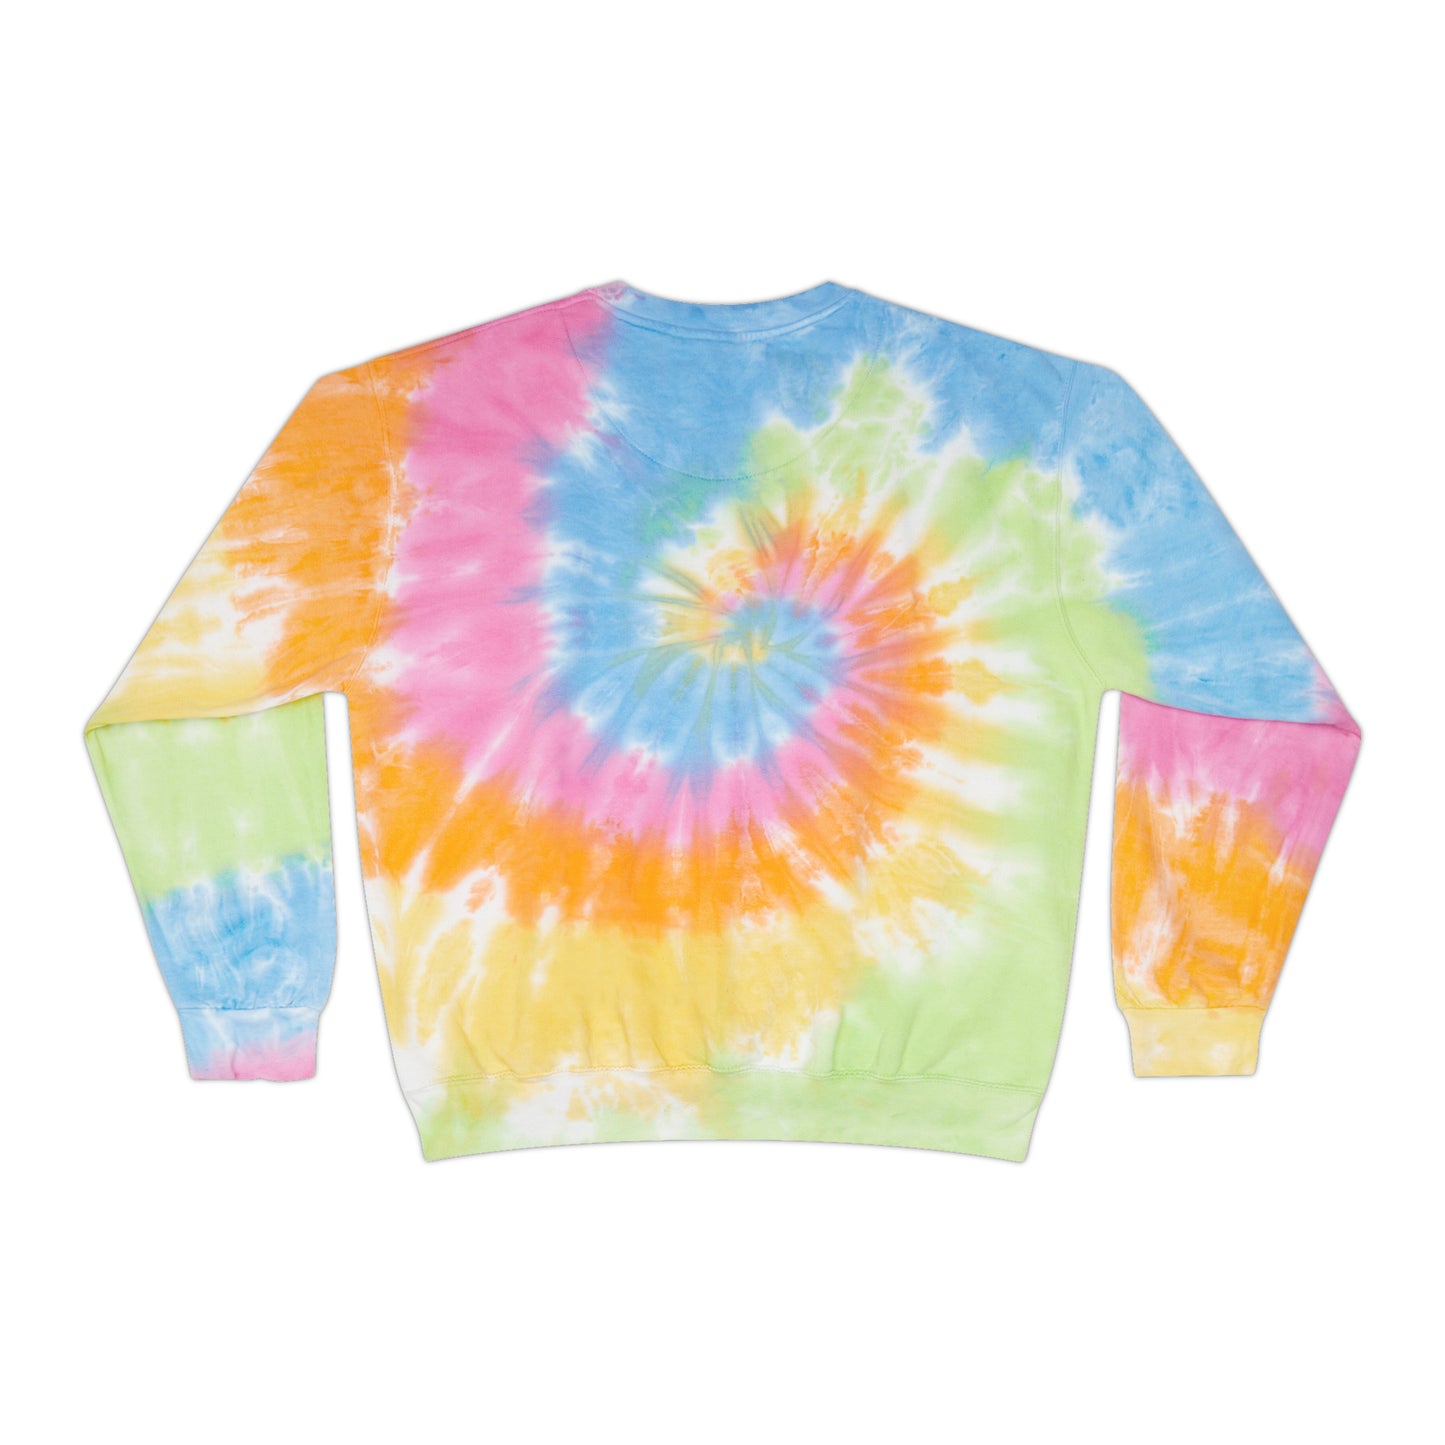 BUDDY CRUISE Unisex Tie-Dye Sweatshirt in 3 Colors